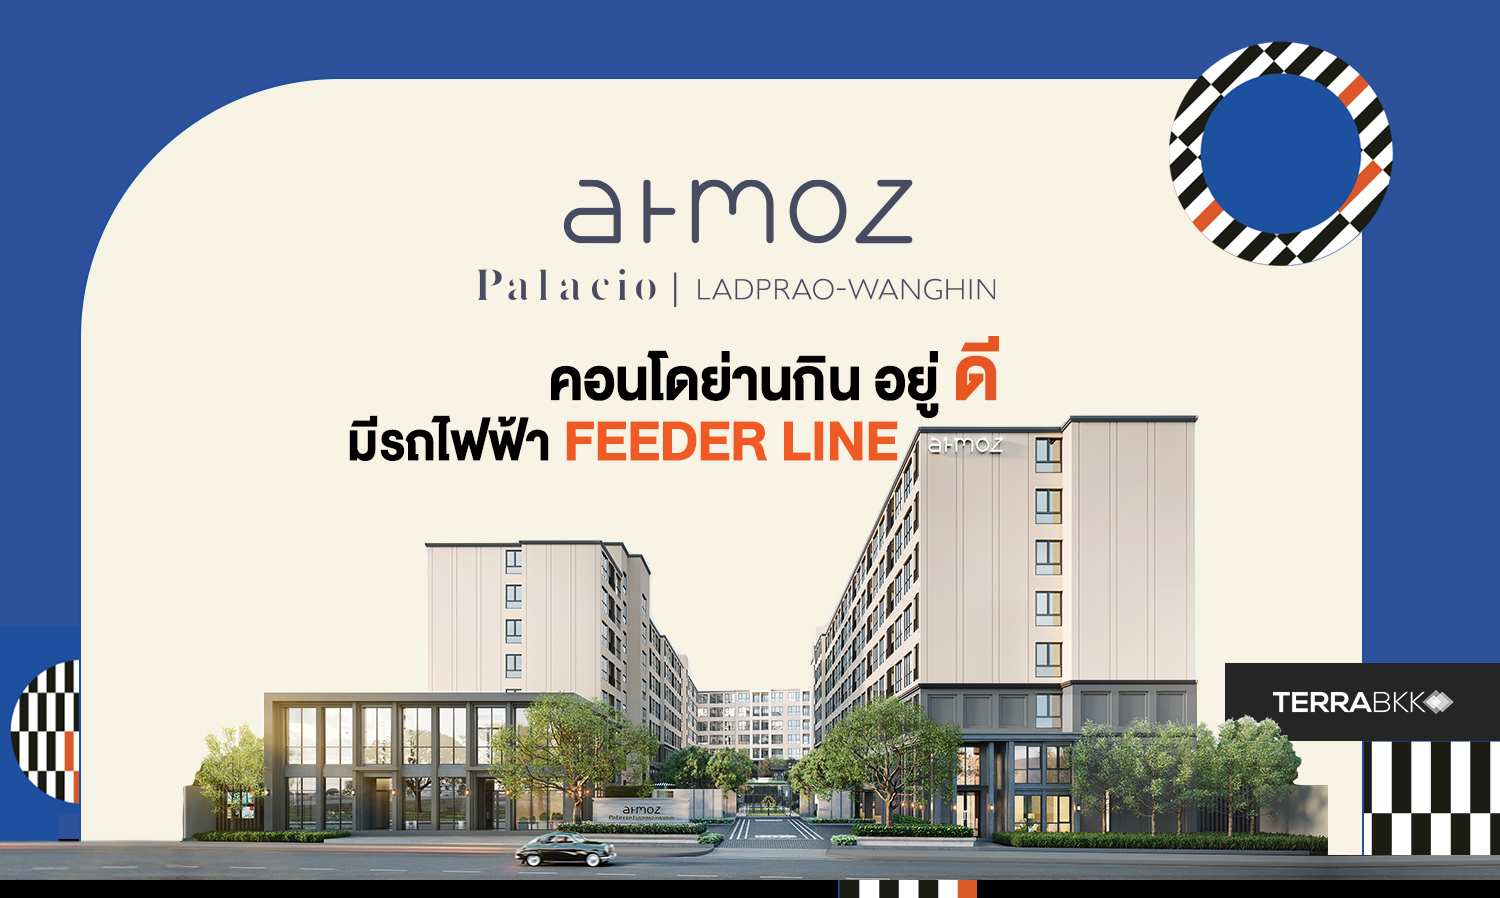 Atmoz Palacio Ladprao-Wanghin คอนโดย่านกิน อยู่ ดี  มีรถไฟฟ้า Feeder Line